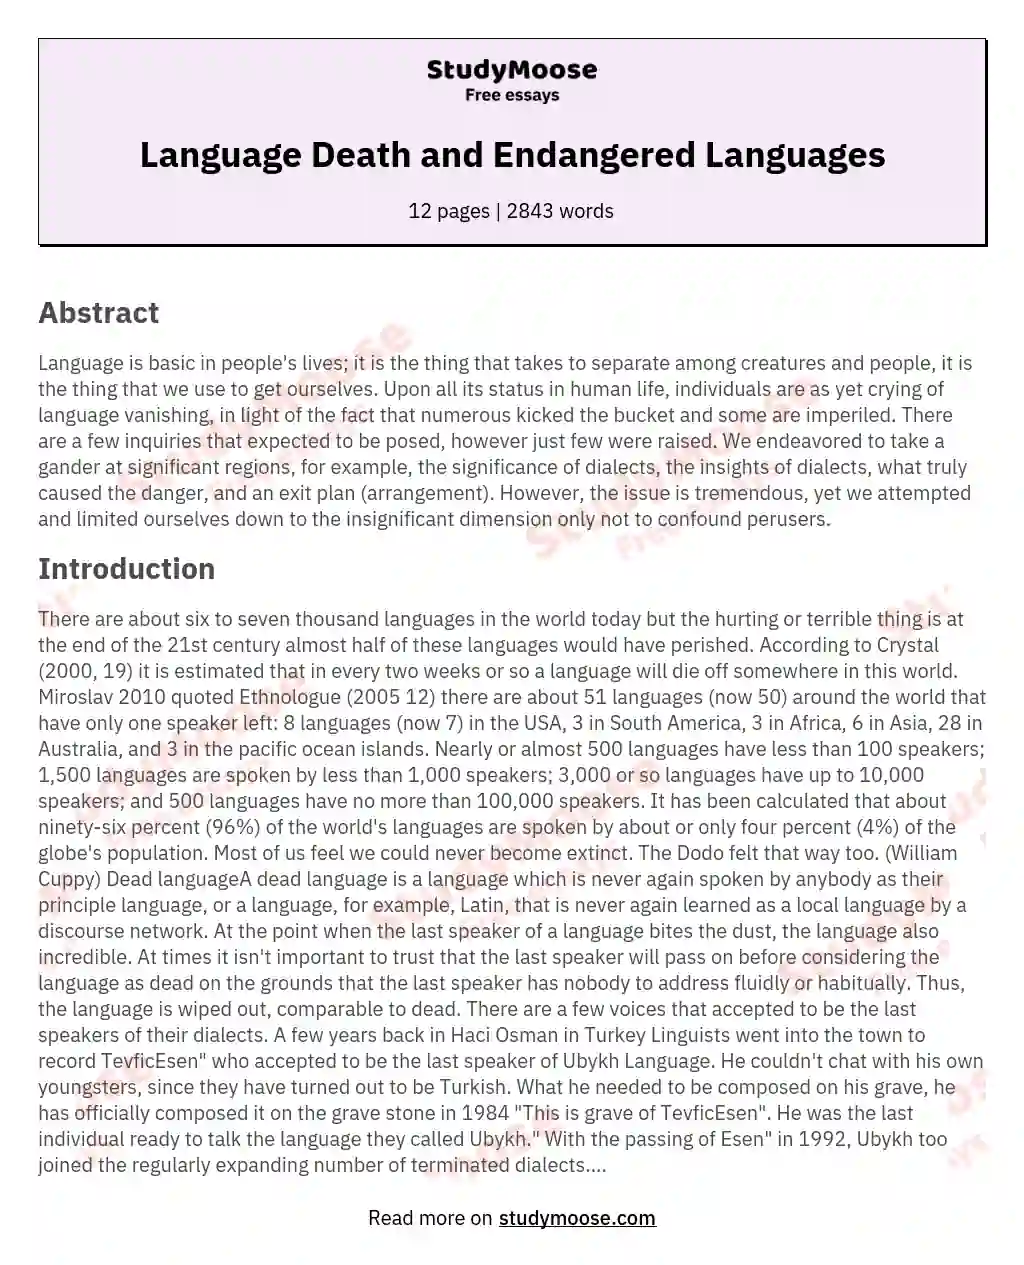 Language Death and Endangered Languages